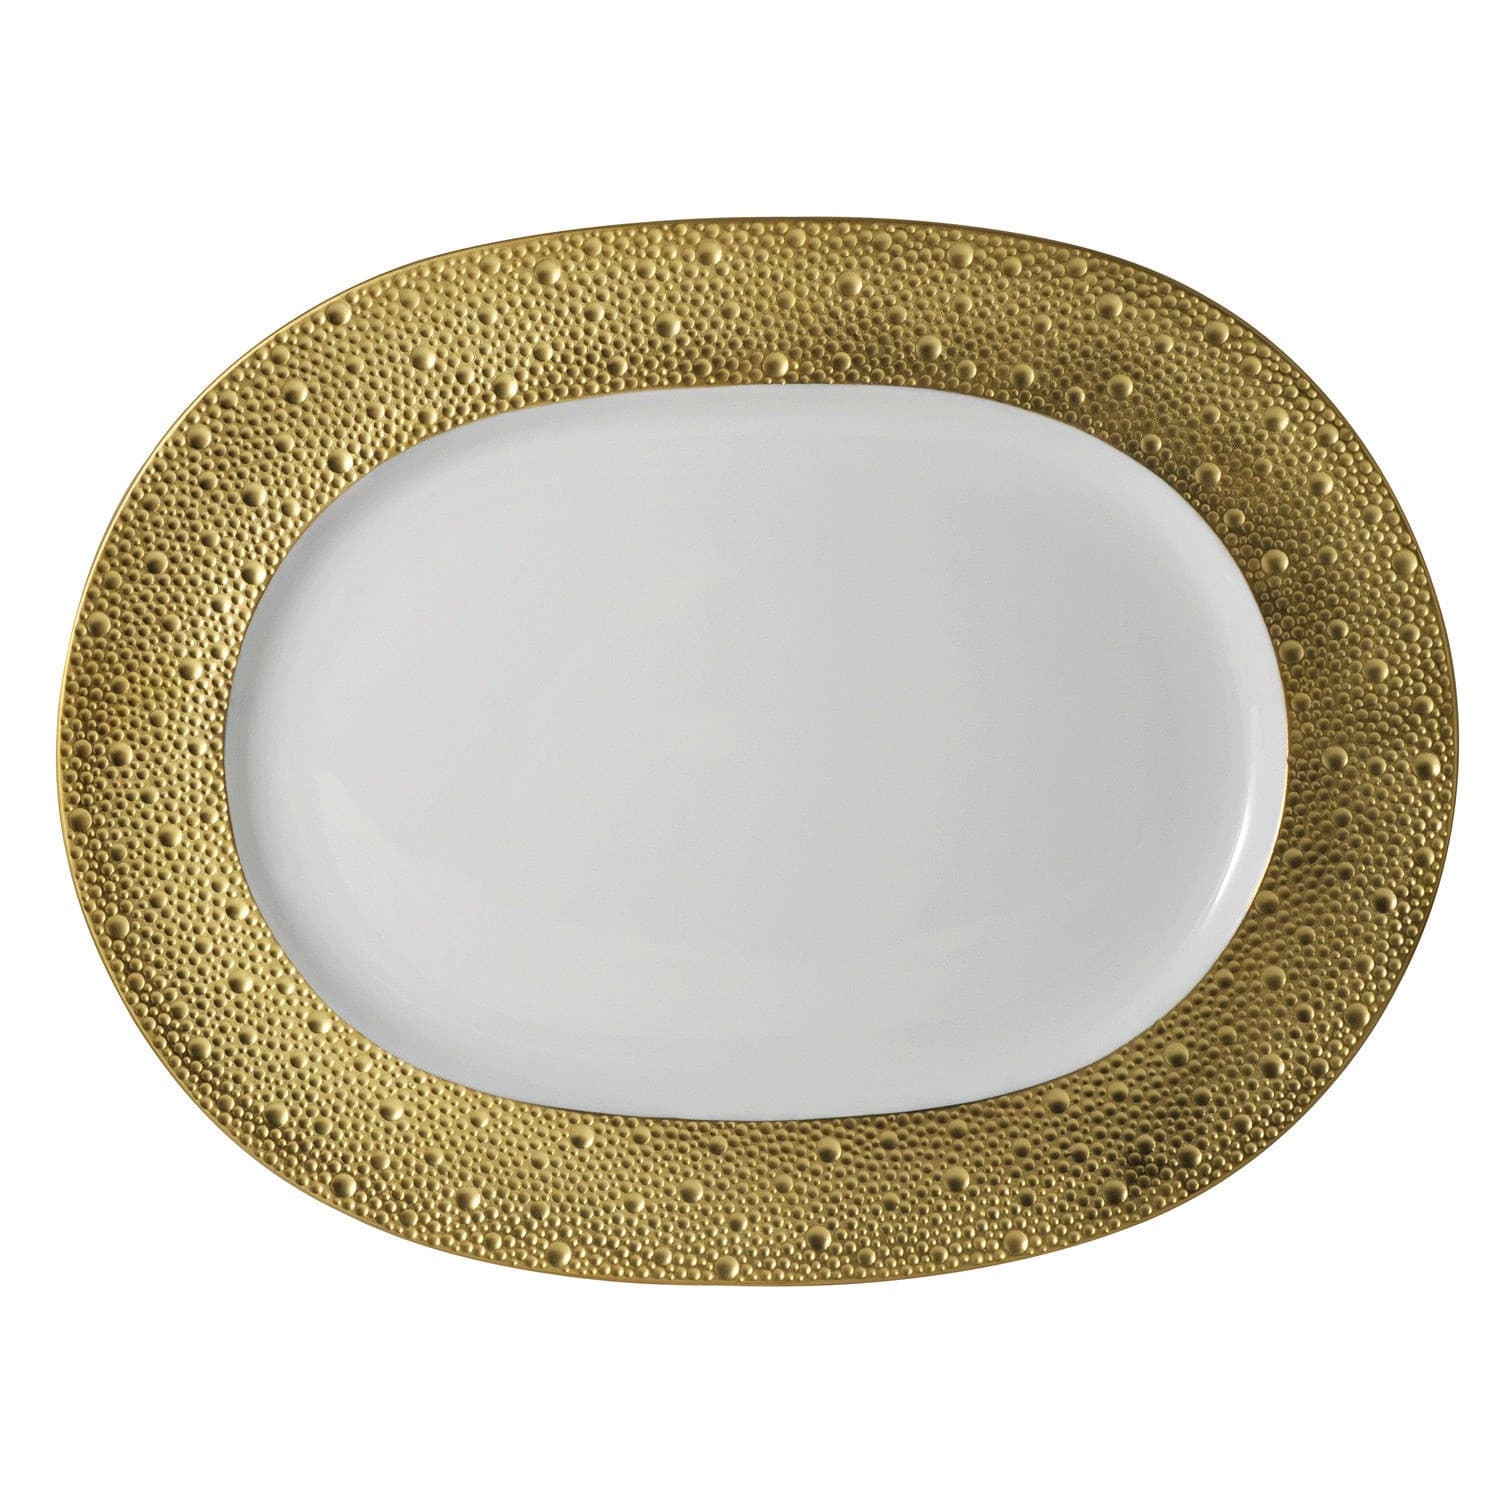 Maison Lipari Ecume Gold Oval Platter - 17"  BERNARDAUD.